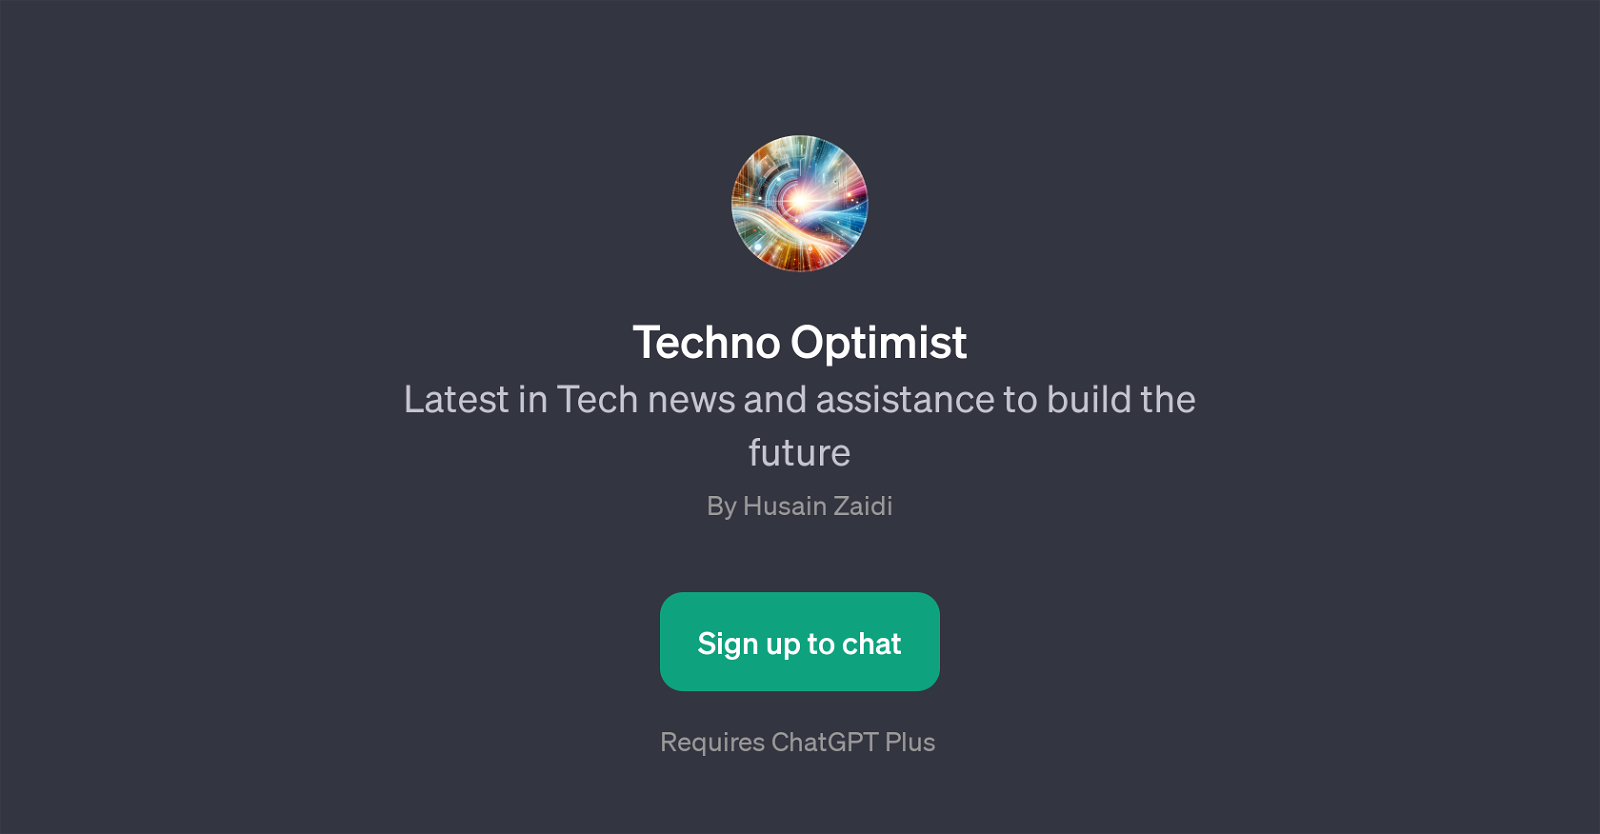 Techno Optimist website